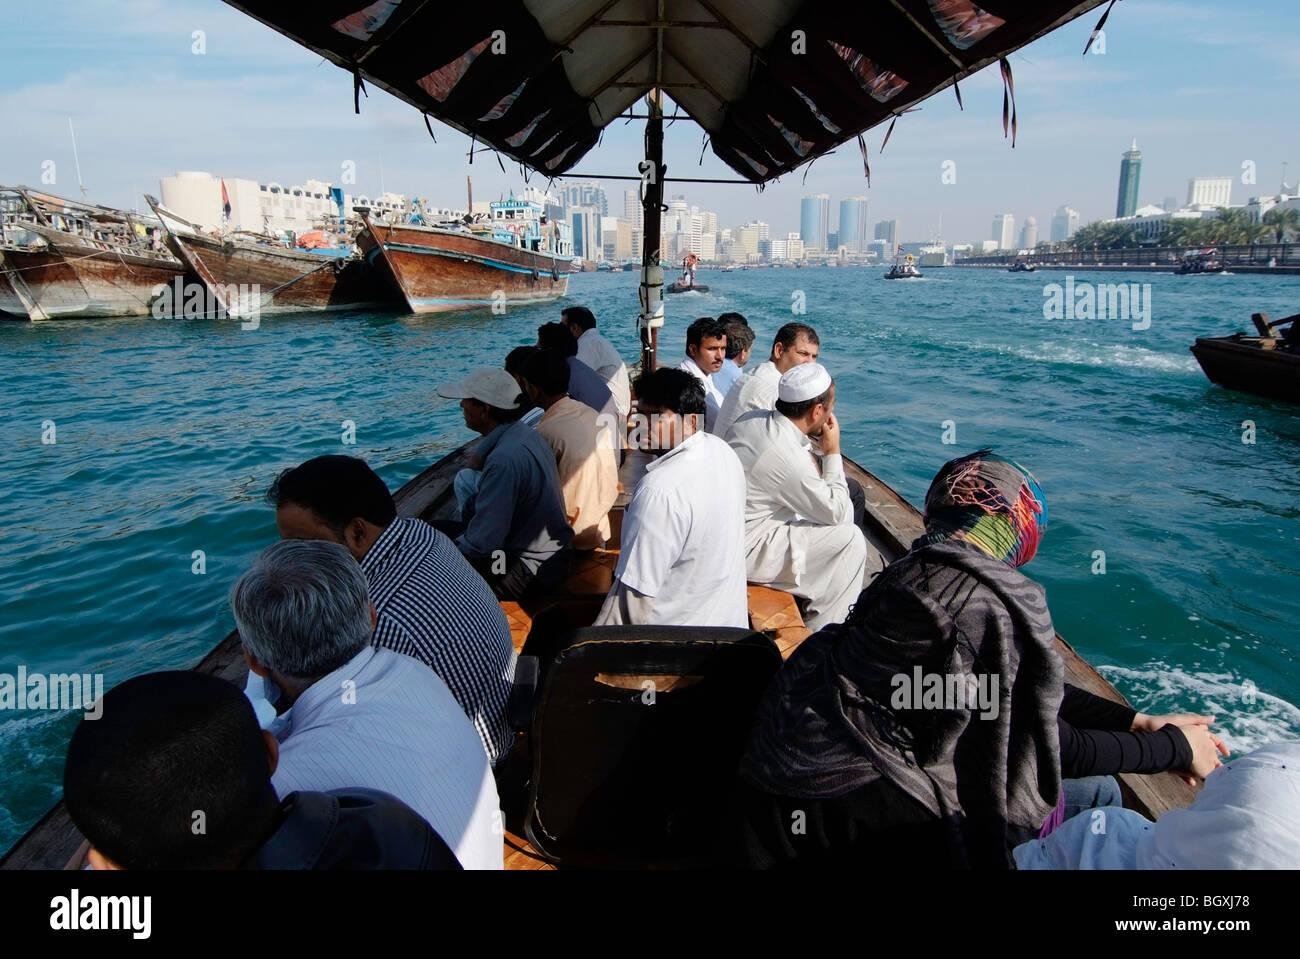 An abra ferries passengers across the creek in Dubai, UAE. Stock Photo